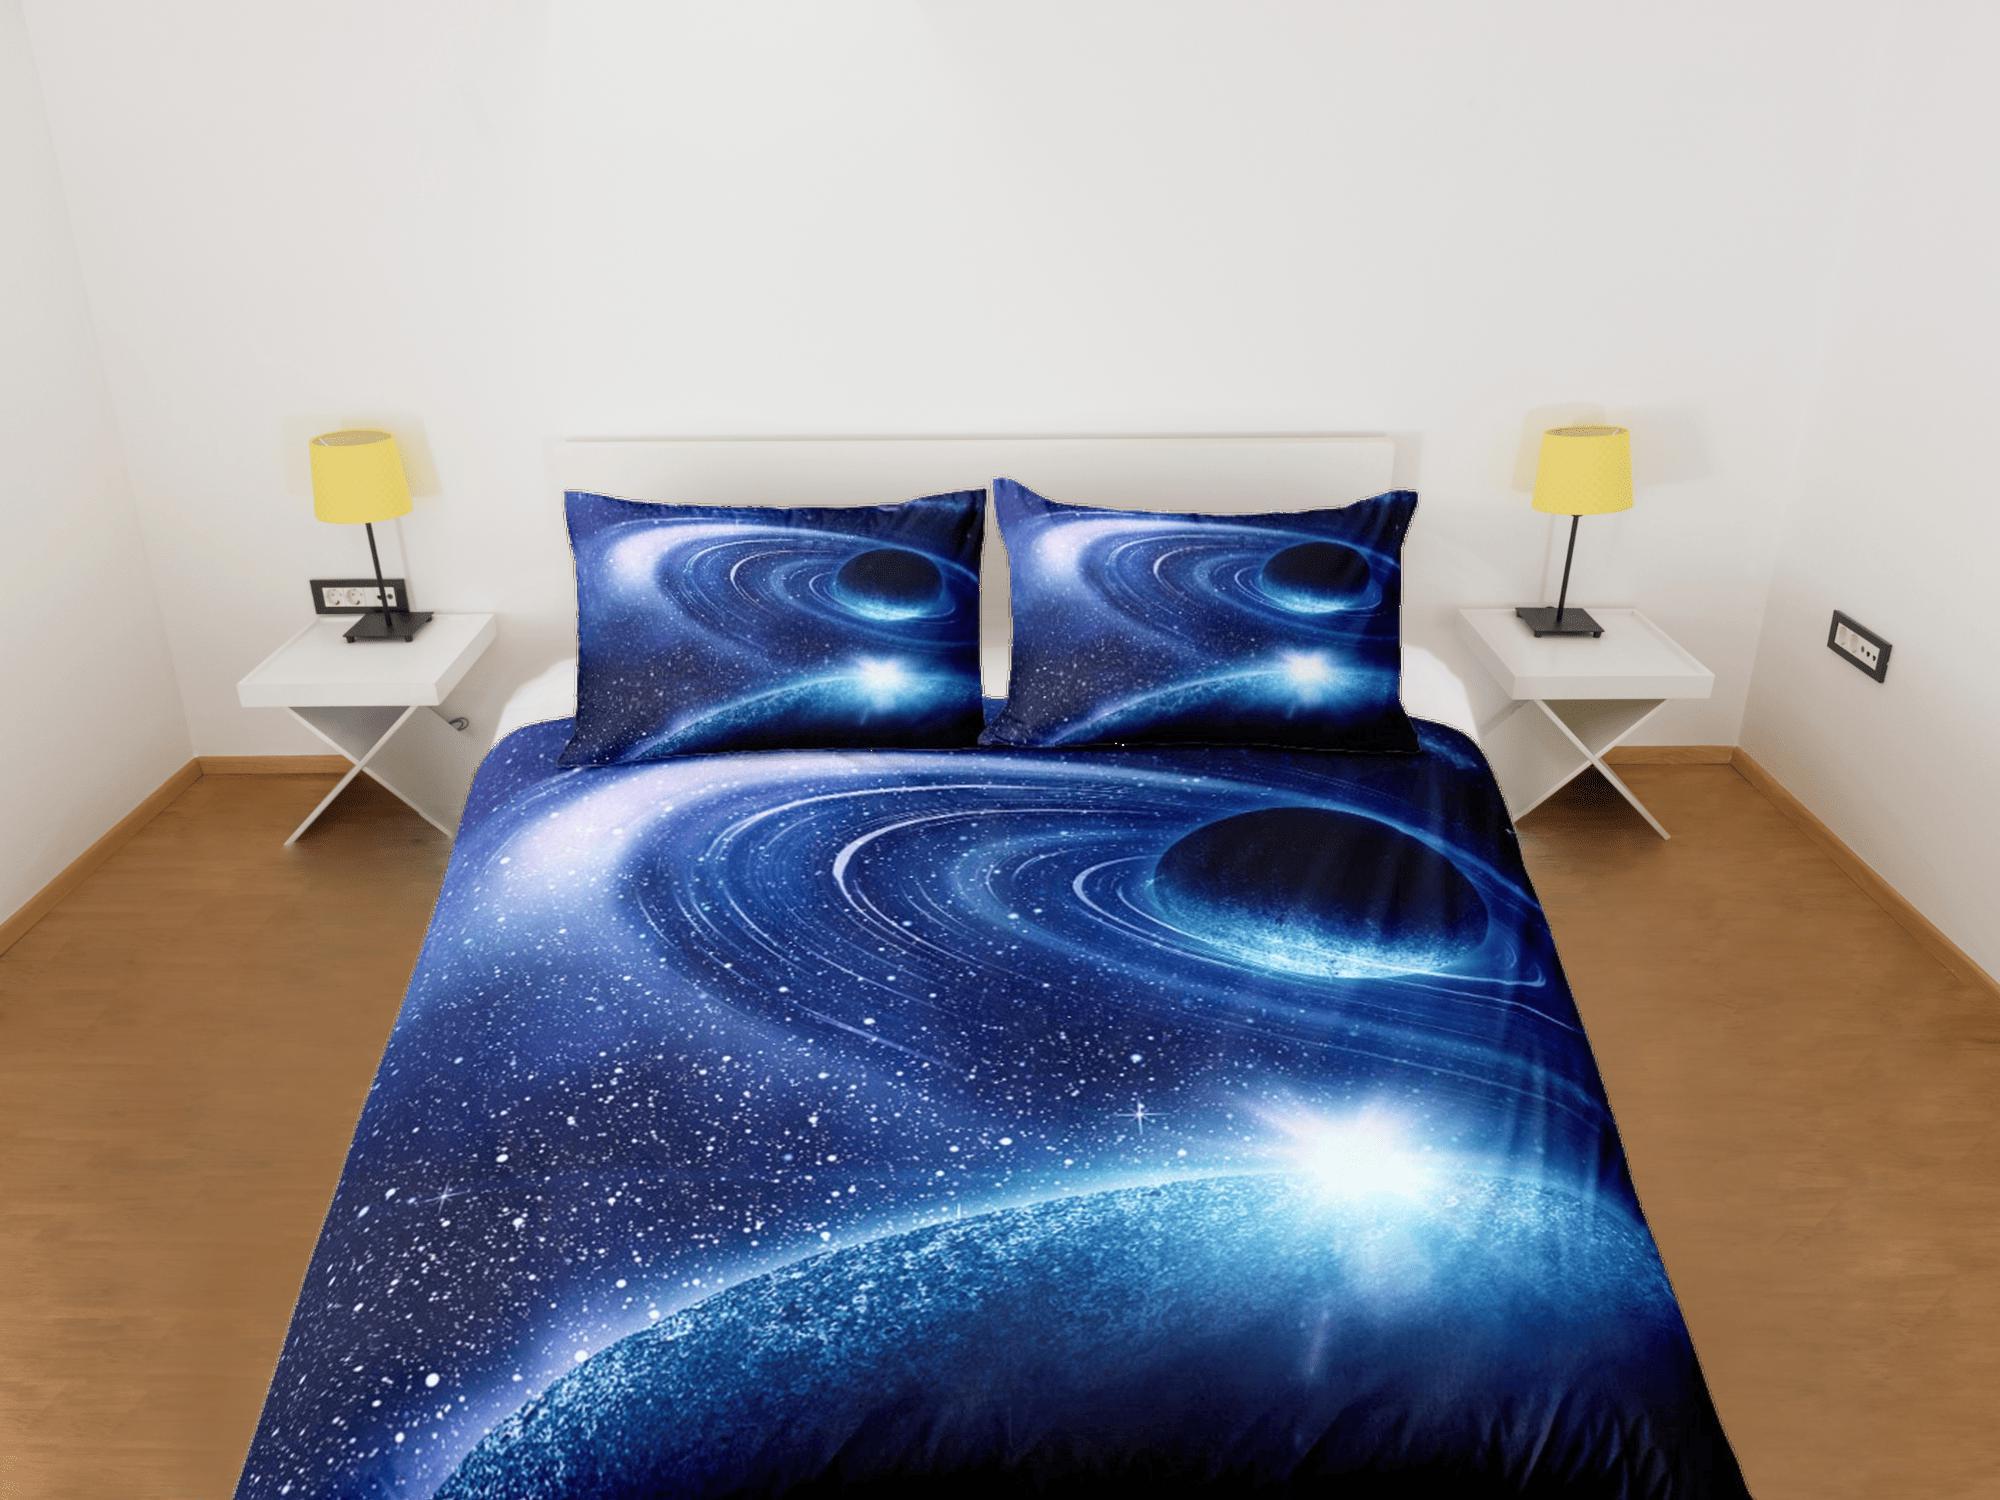 daintyduvet Planets Galaxy Orbit Blue Duvet Cover Set Bedspread, Dorm Bedding with Pillowcase